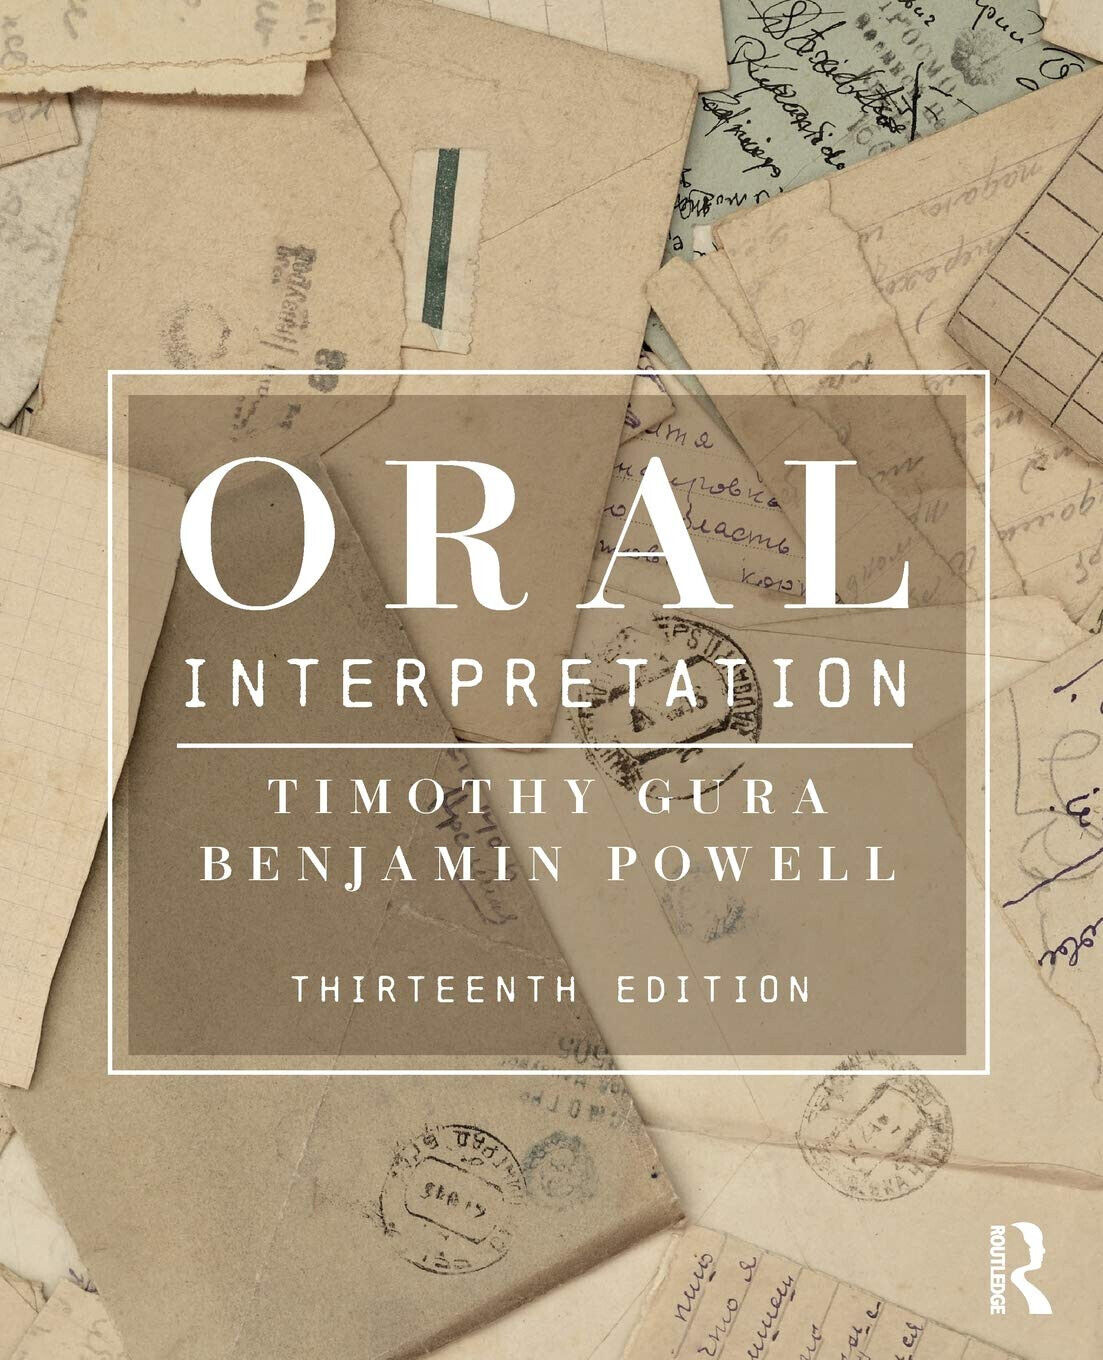 Oral Interpretation - Timothy - Routledge, 2018